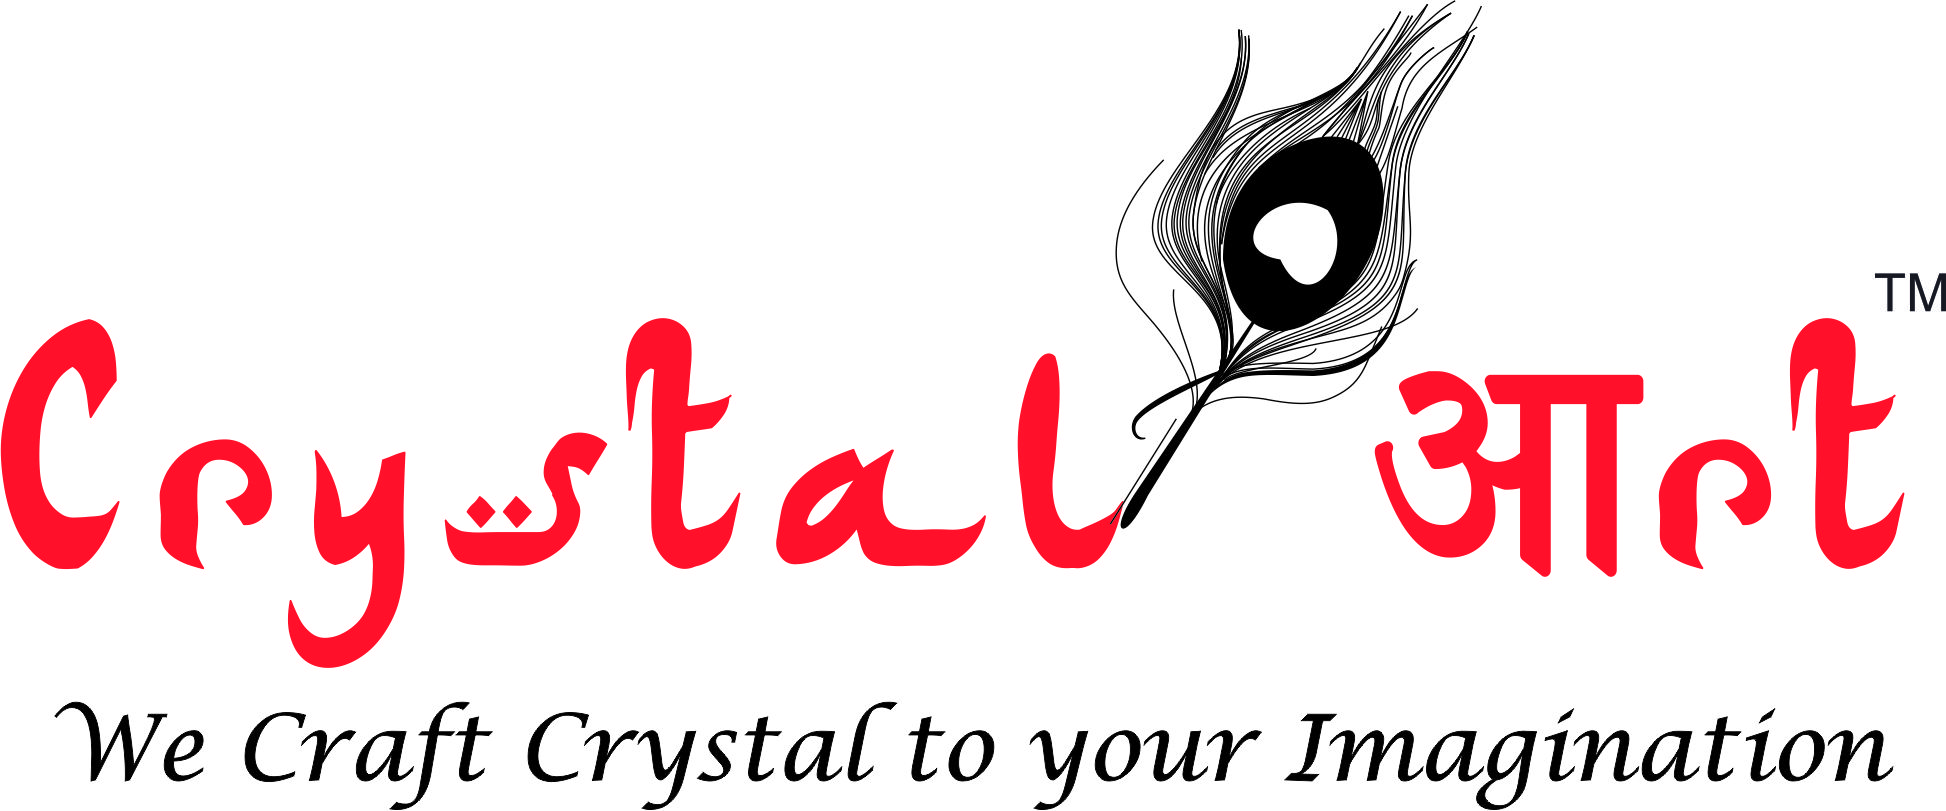 Crystal Art